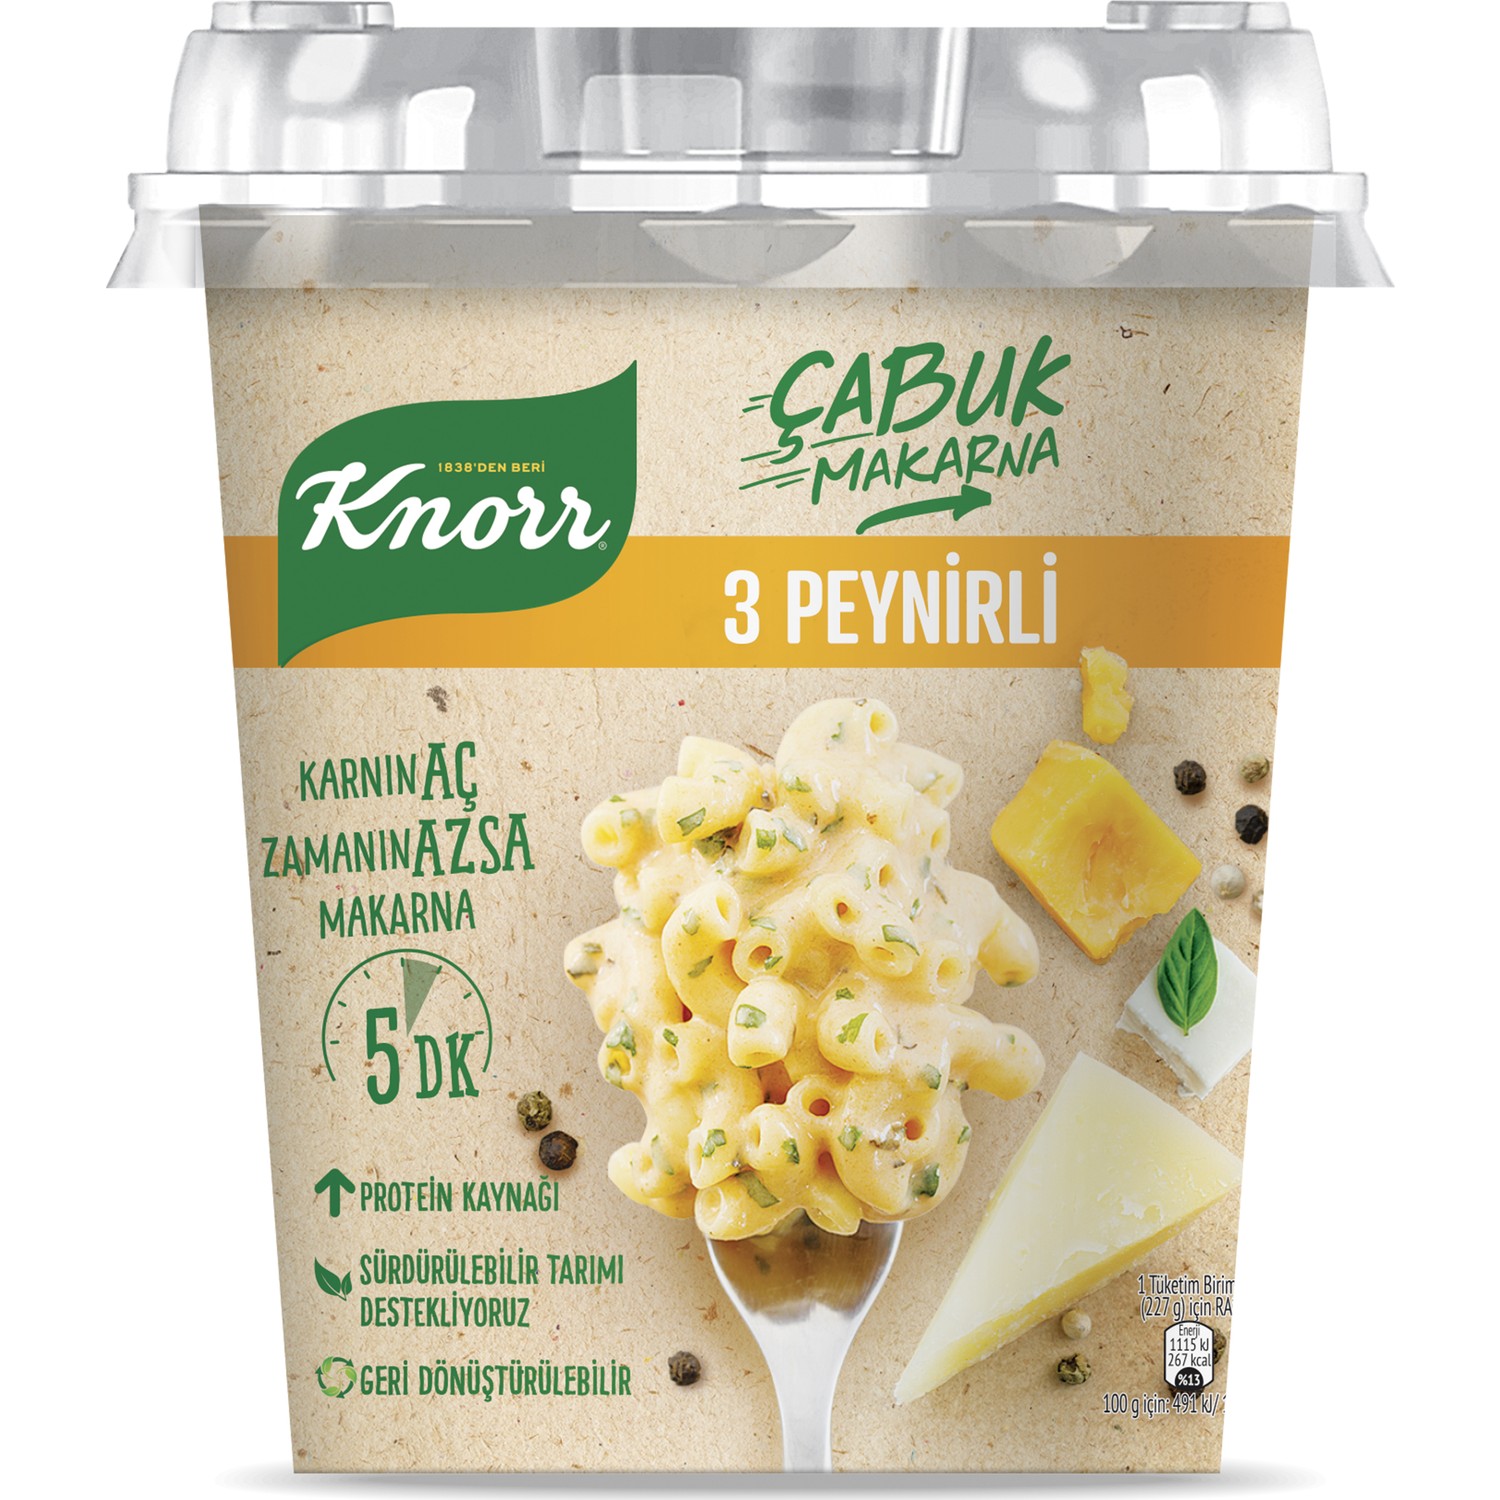 Knorr Cabuk Makarna 3 Peynirli 78 Gr Fiyati Taksit Secenekleri